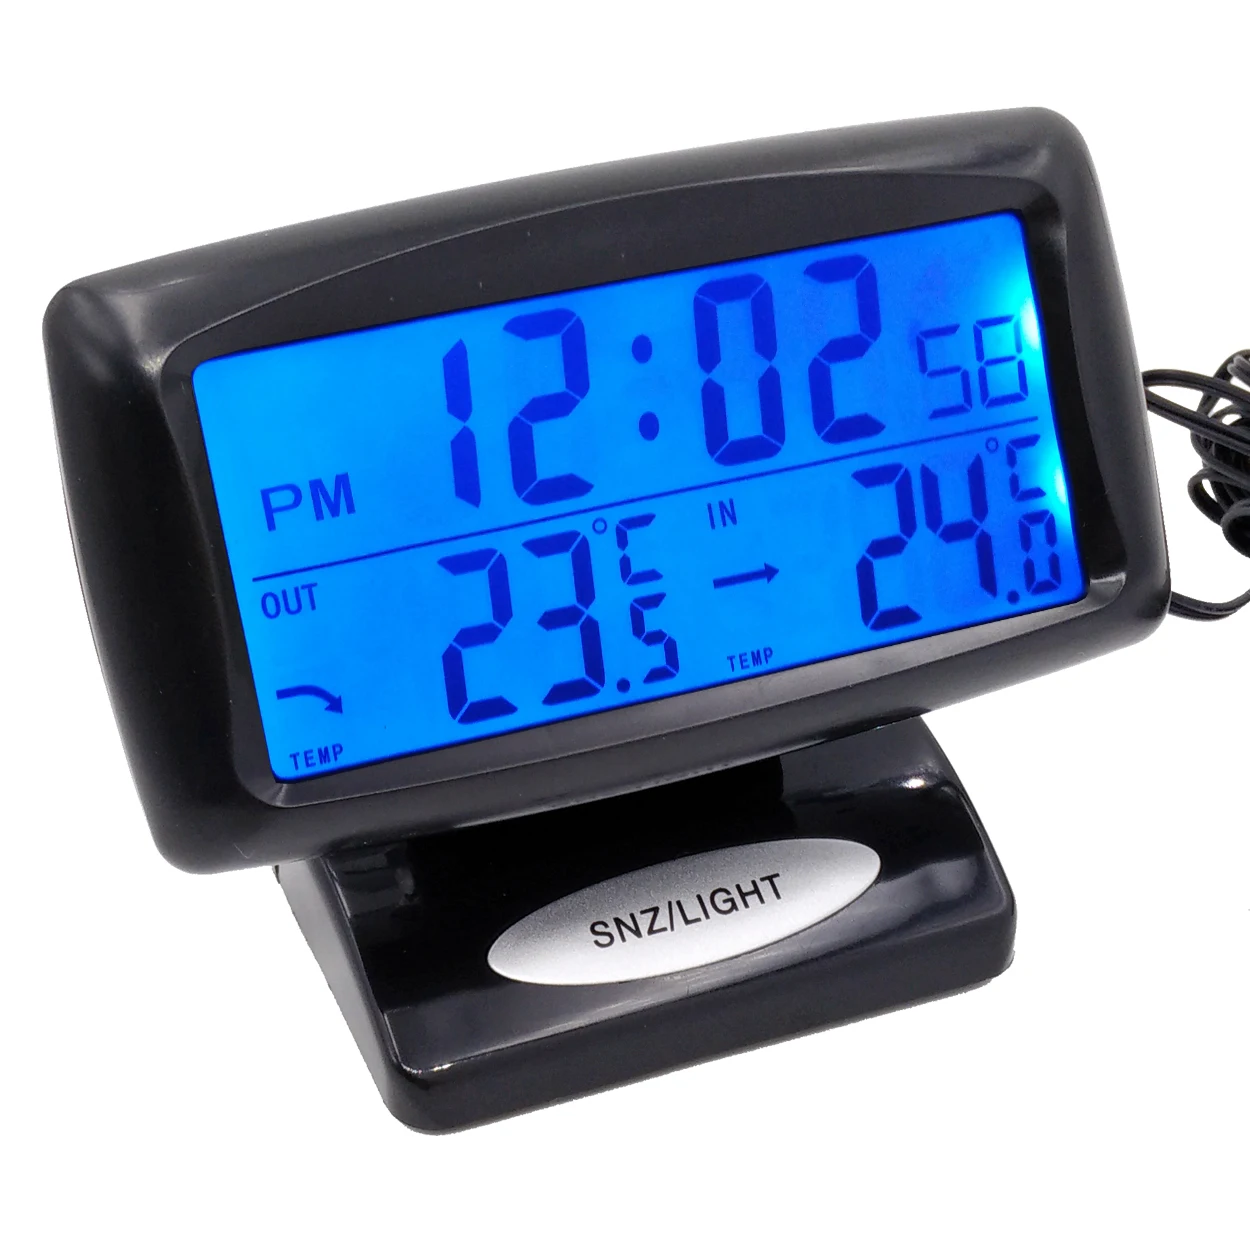 

Home Auto Car Indoor/Outdoor Digital Thermometer Clock Temp Sense Digital Backlight LCD Display Snooze Alarm Calendar Long Line